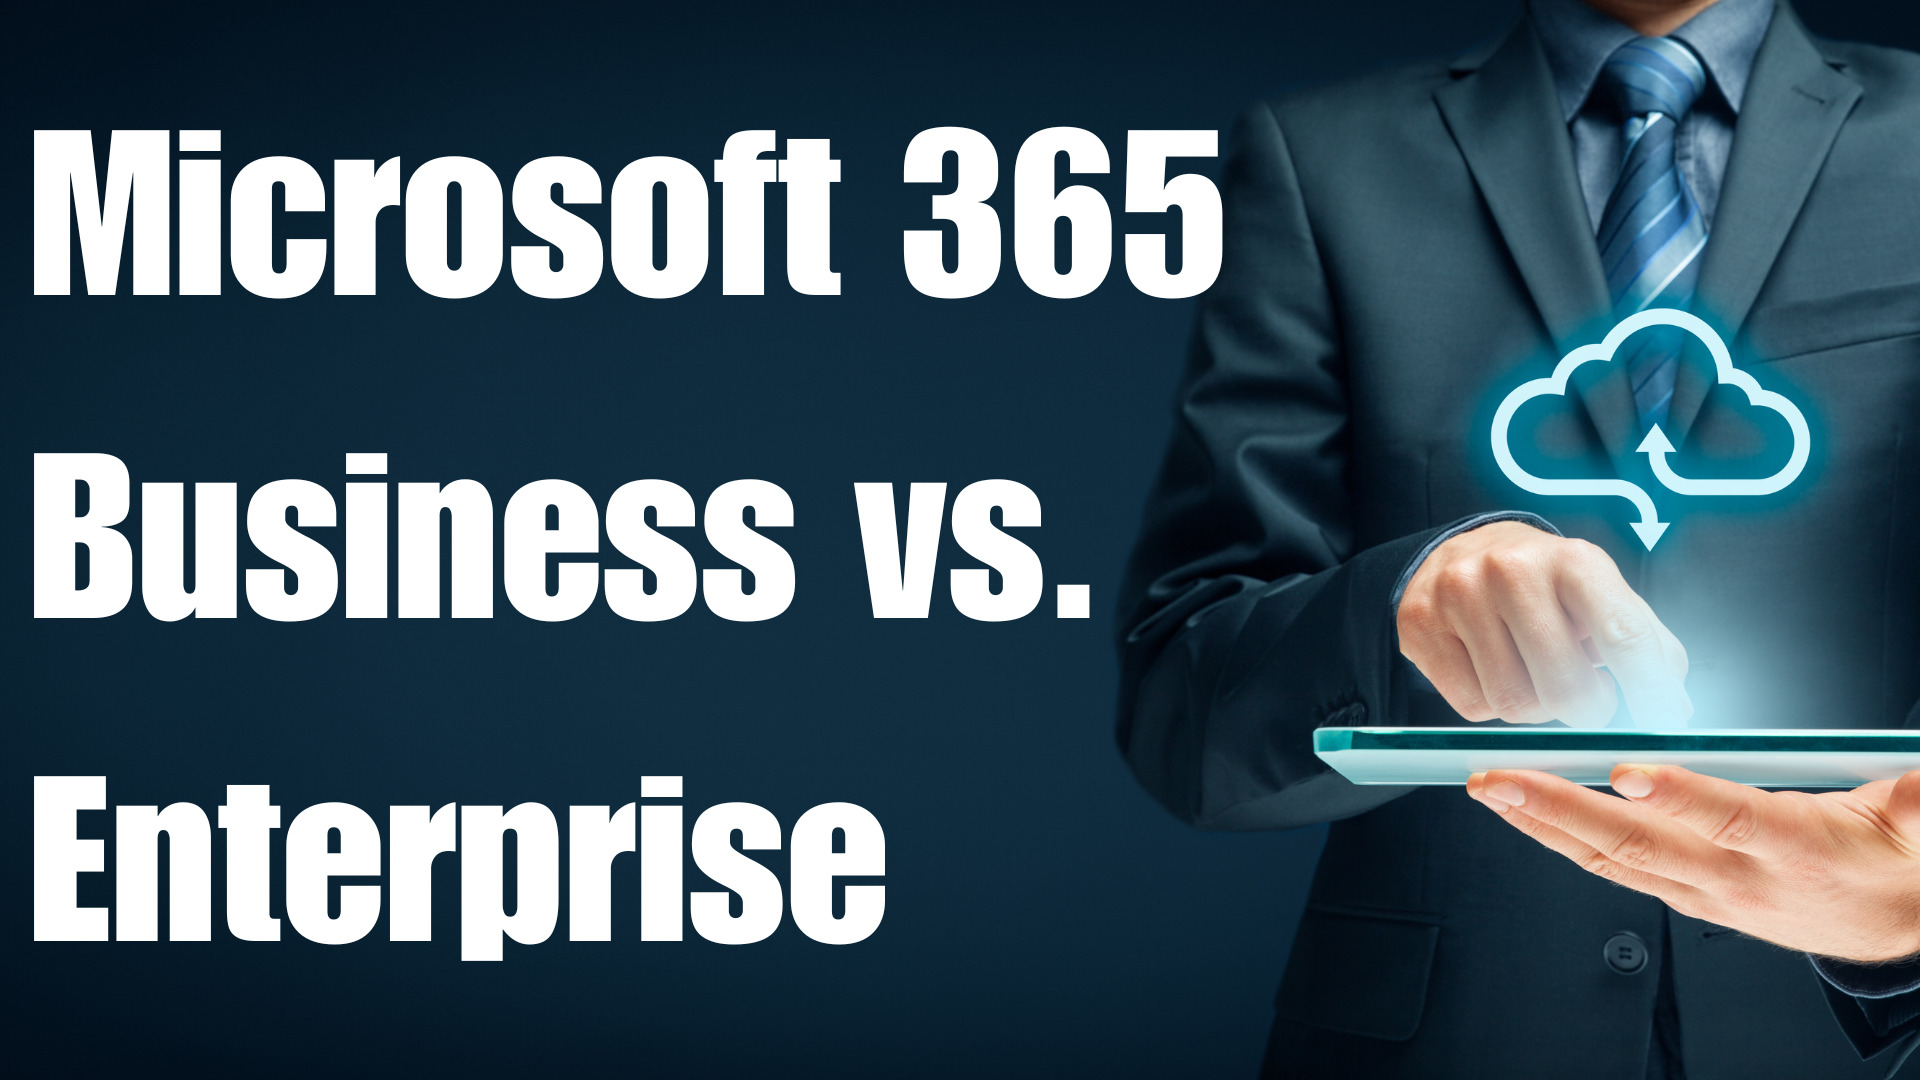 Microsoft 365 Business vs. Enterprise